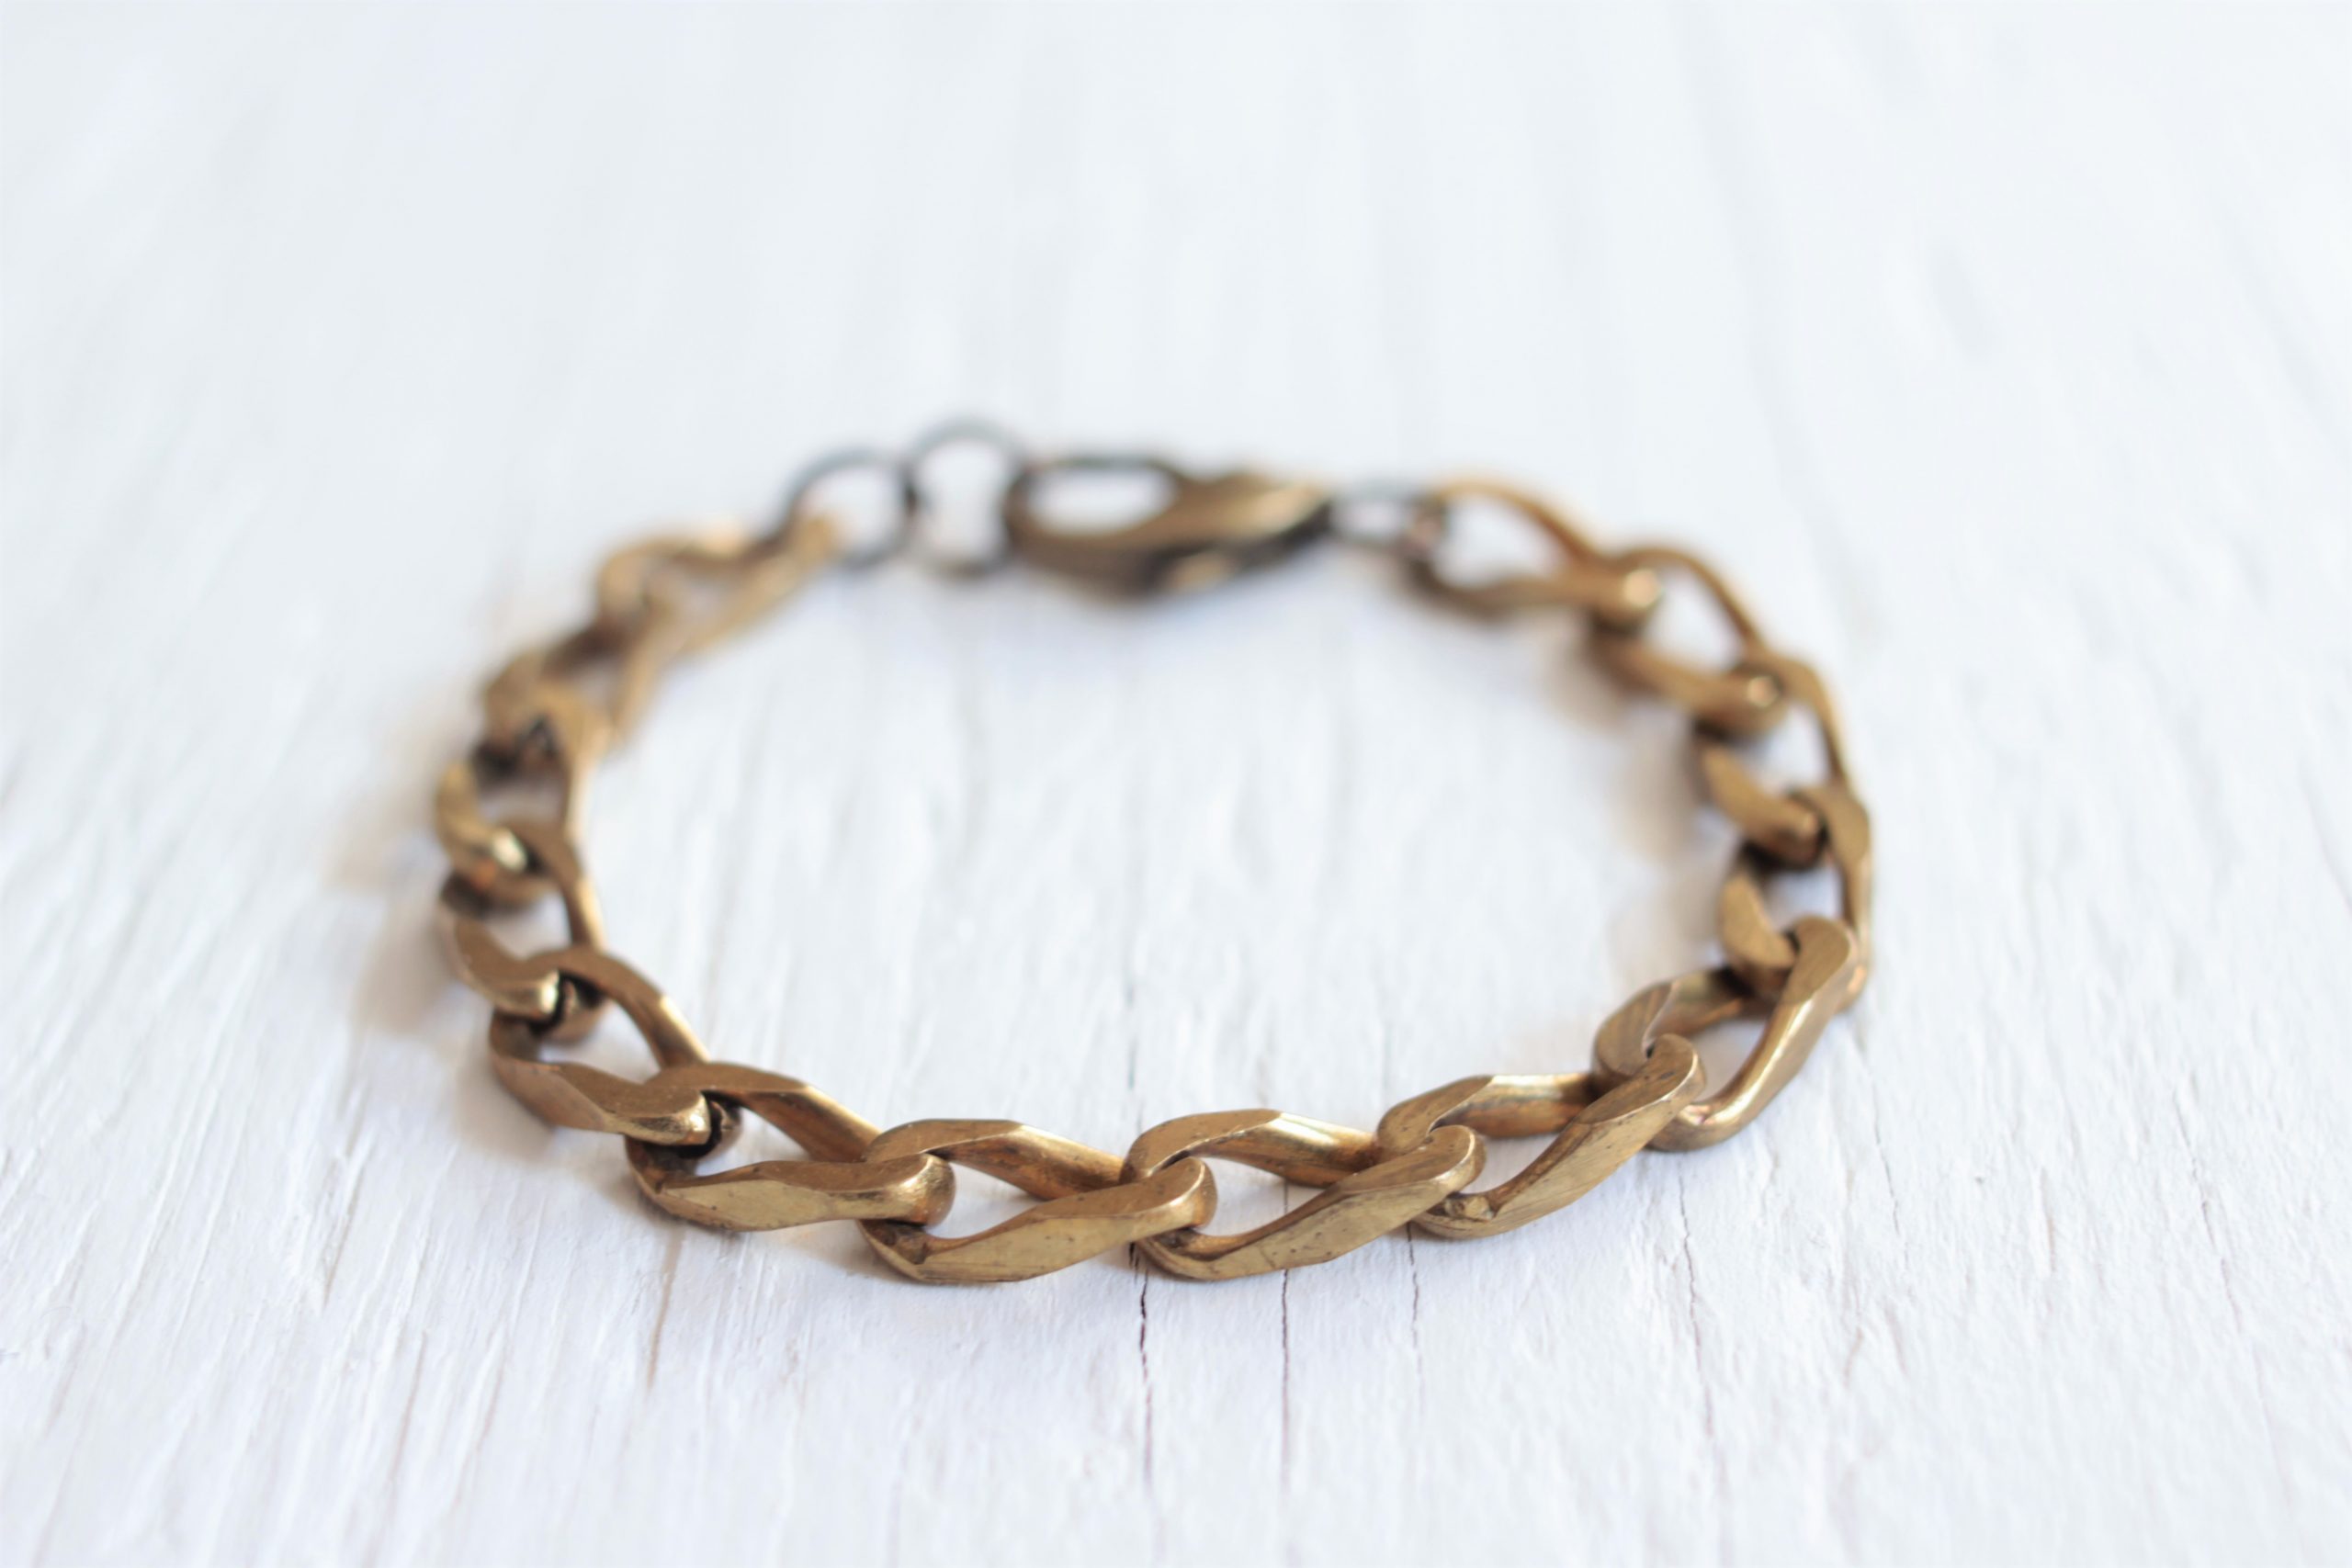 Vintage chain bracelet